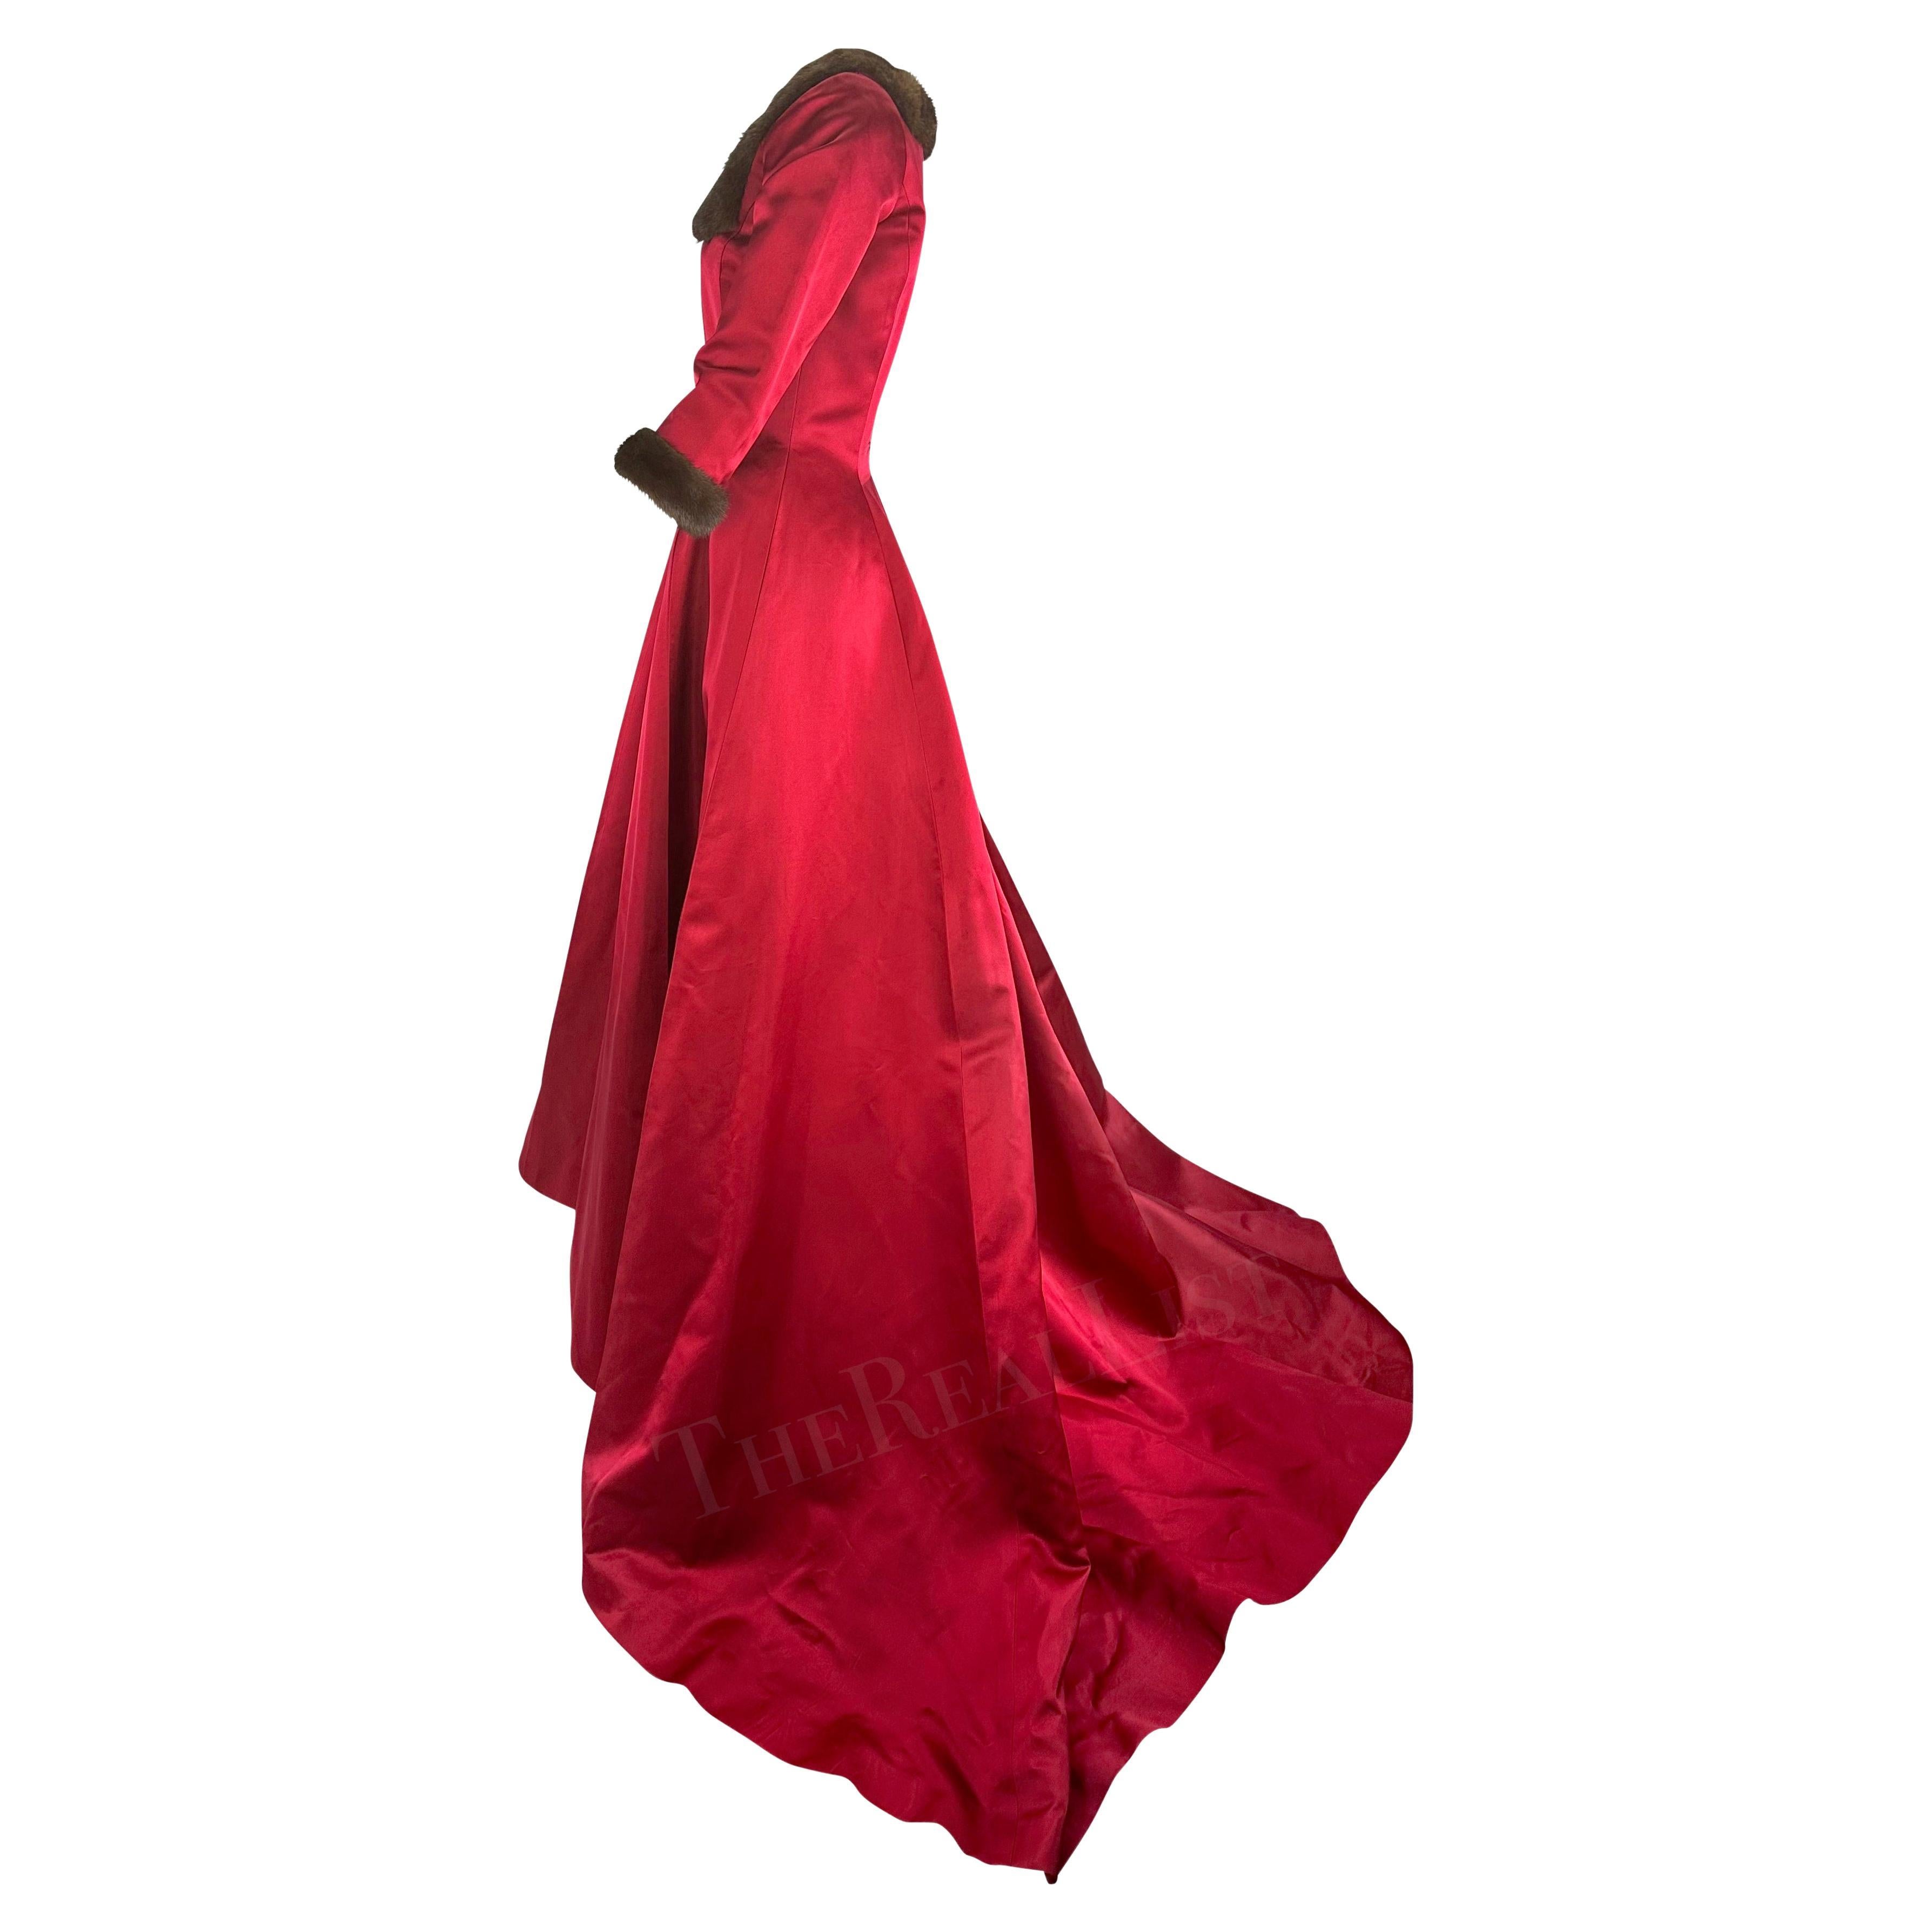 F/W 1999 Oscar de la Renta Naomi Campbell Runway Red Silk Satin Regal Mink Gown For Sale 2